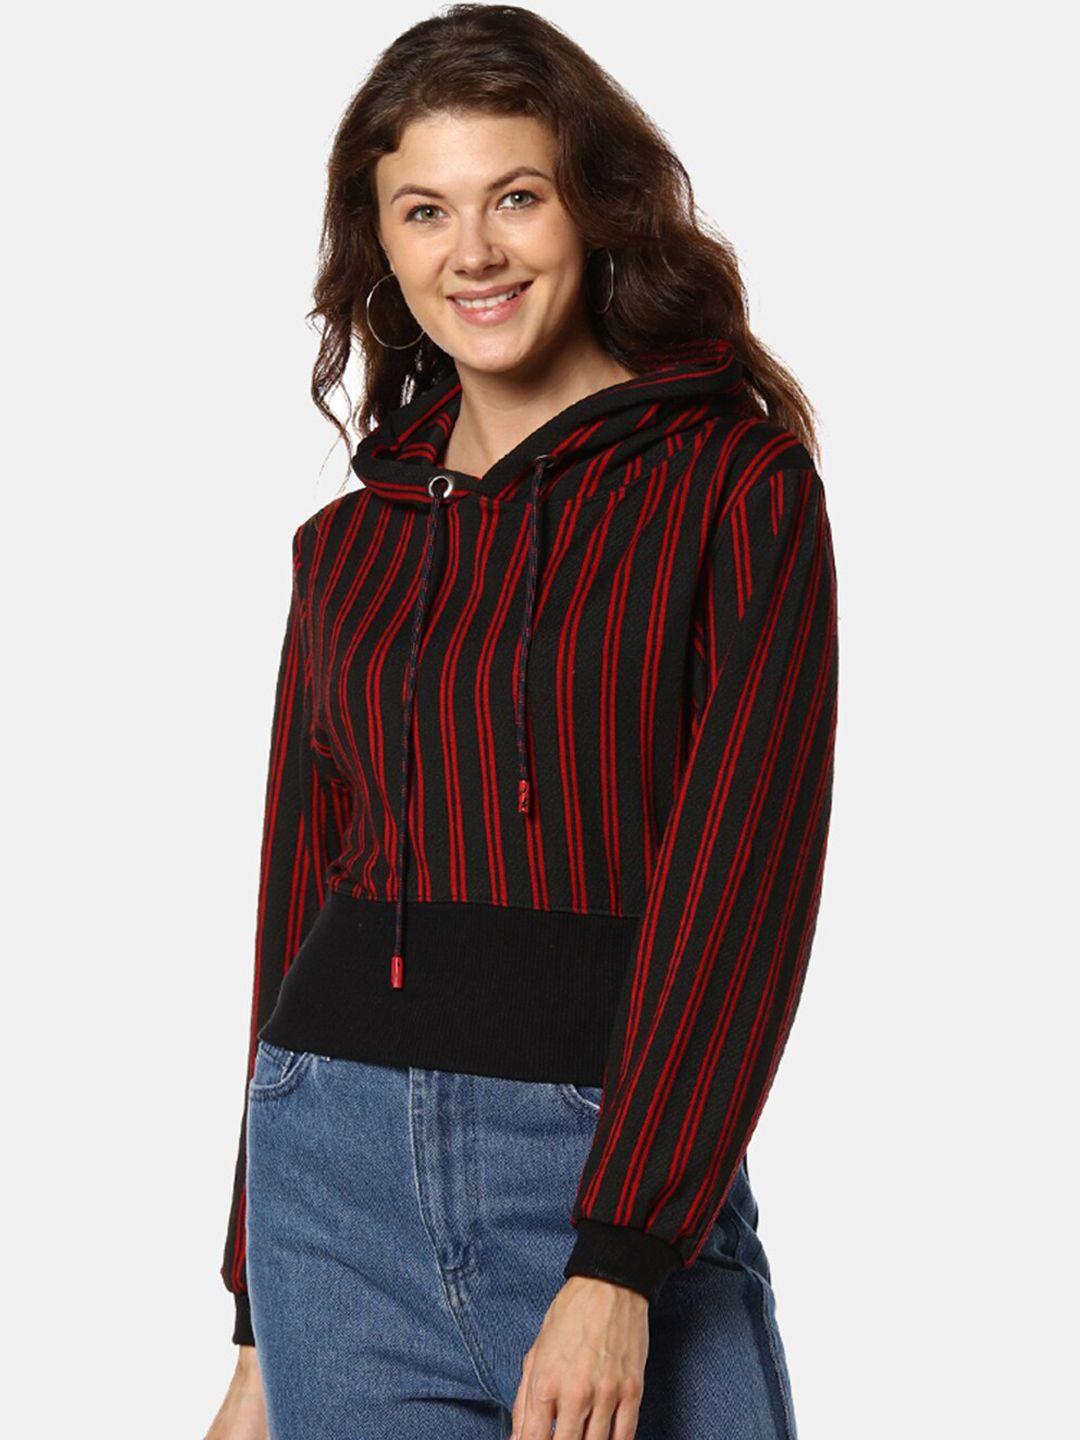 campus-sutra-women-red-&-black-striped-hooded-sweatshirt